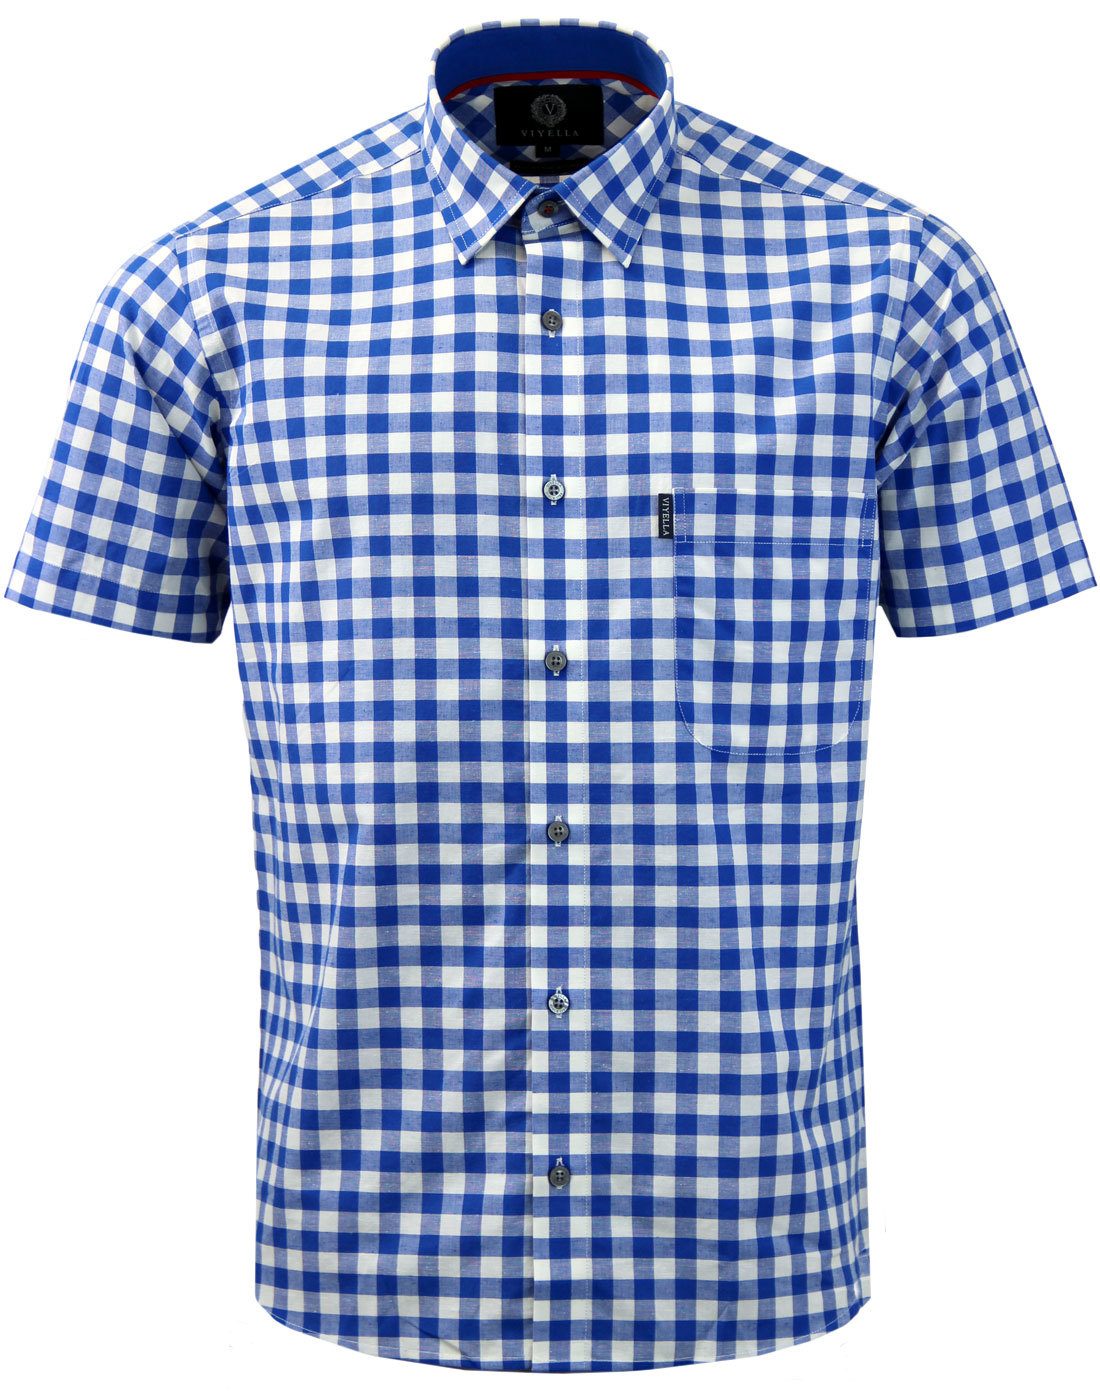 VIYELLA Cotton Retro Mod Linen Gingham Check Shirt